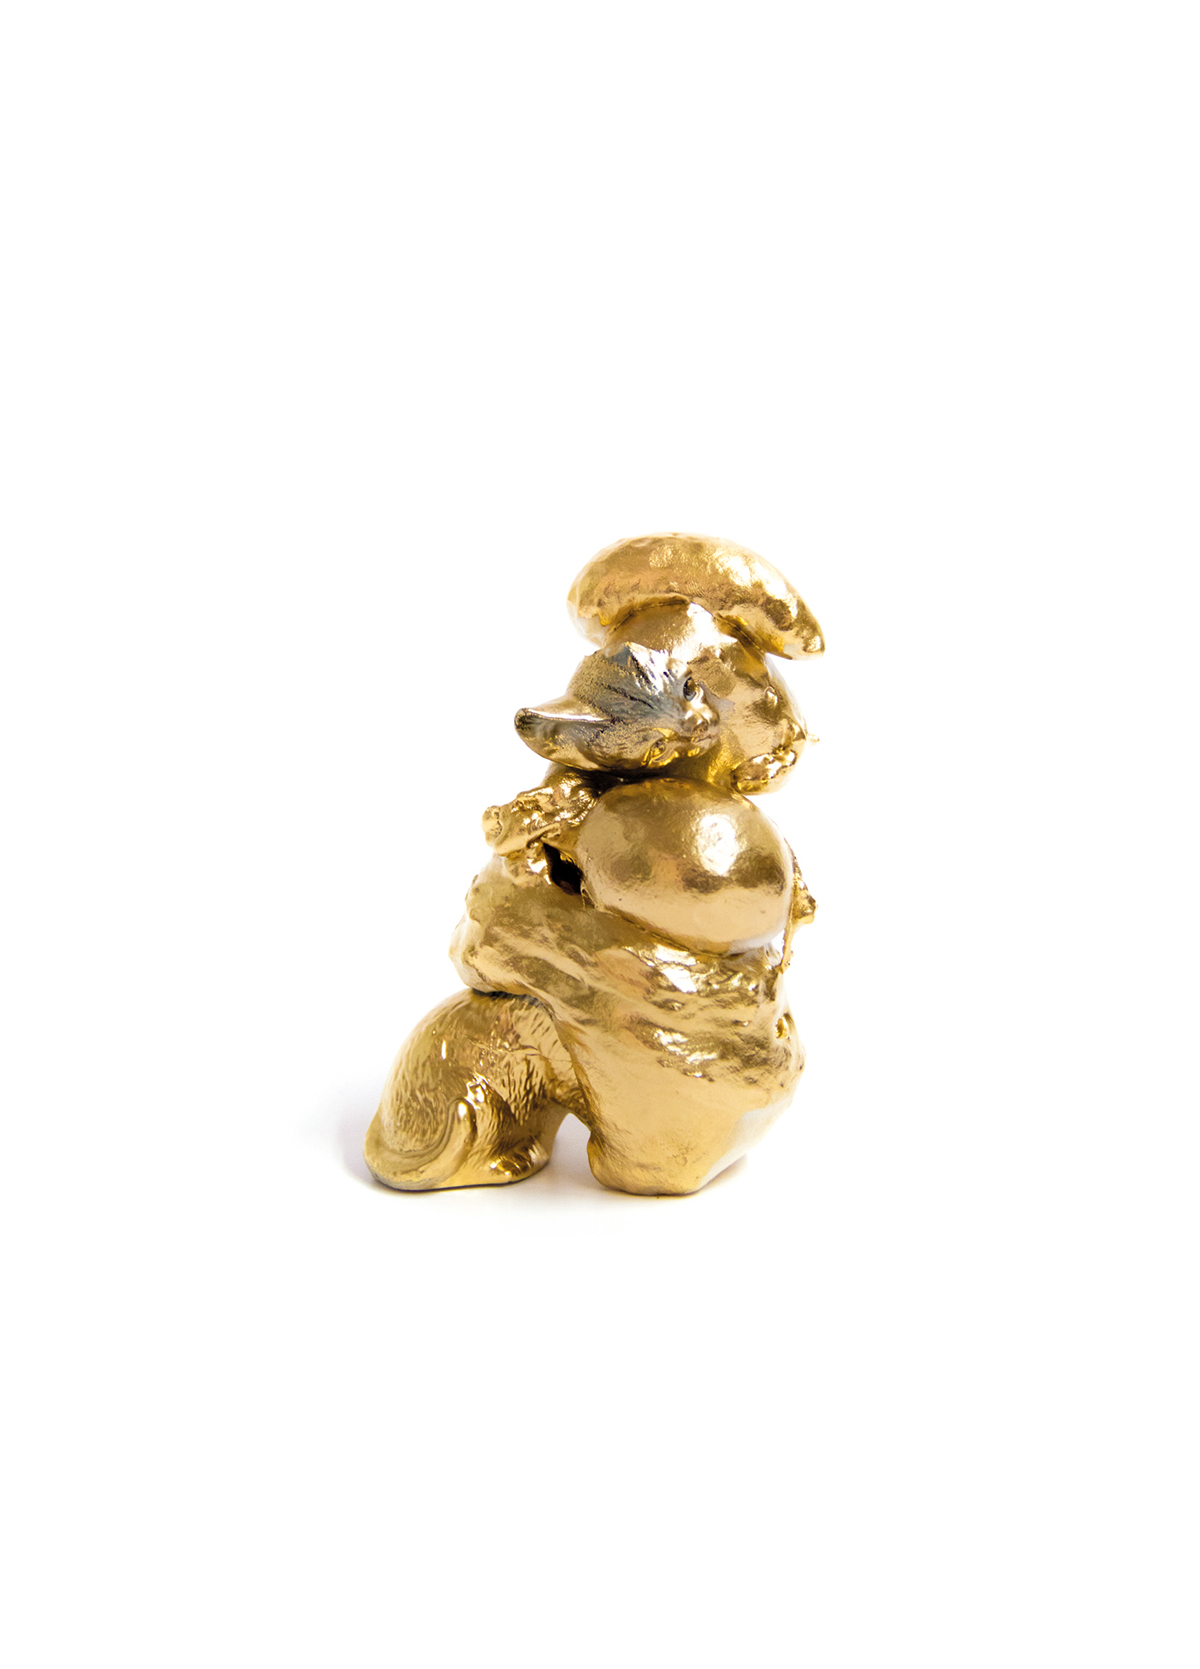 gold sculpture hound dog porcelain Montana spray